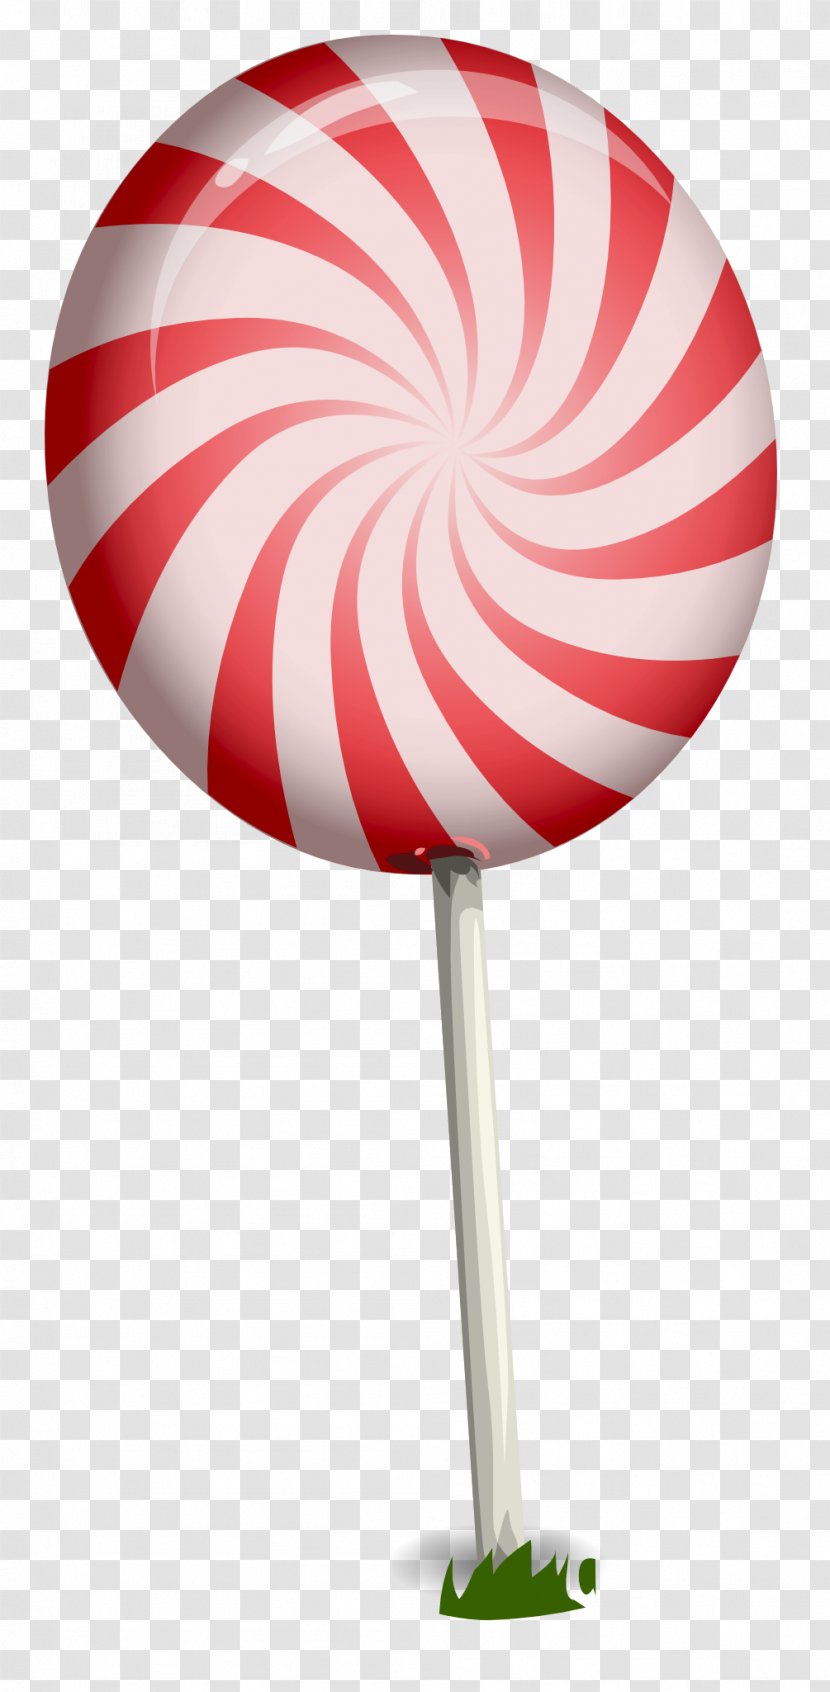 Lollipop Stick Candy - Sucrose Transparent PNG